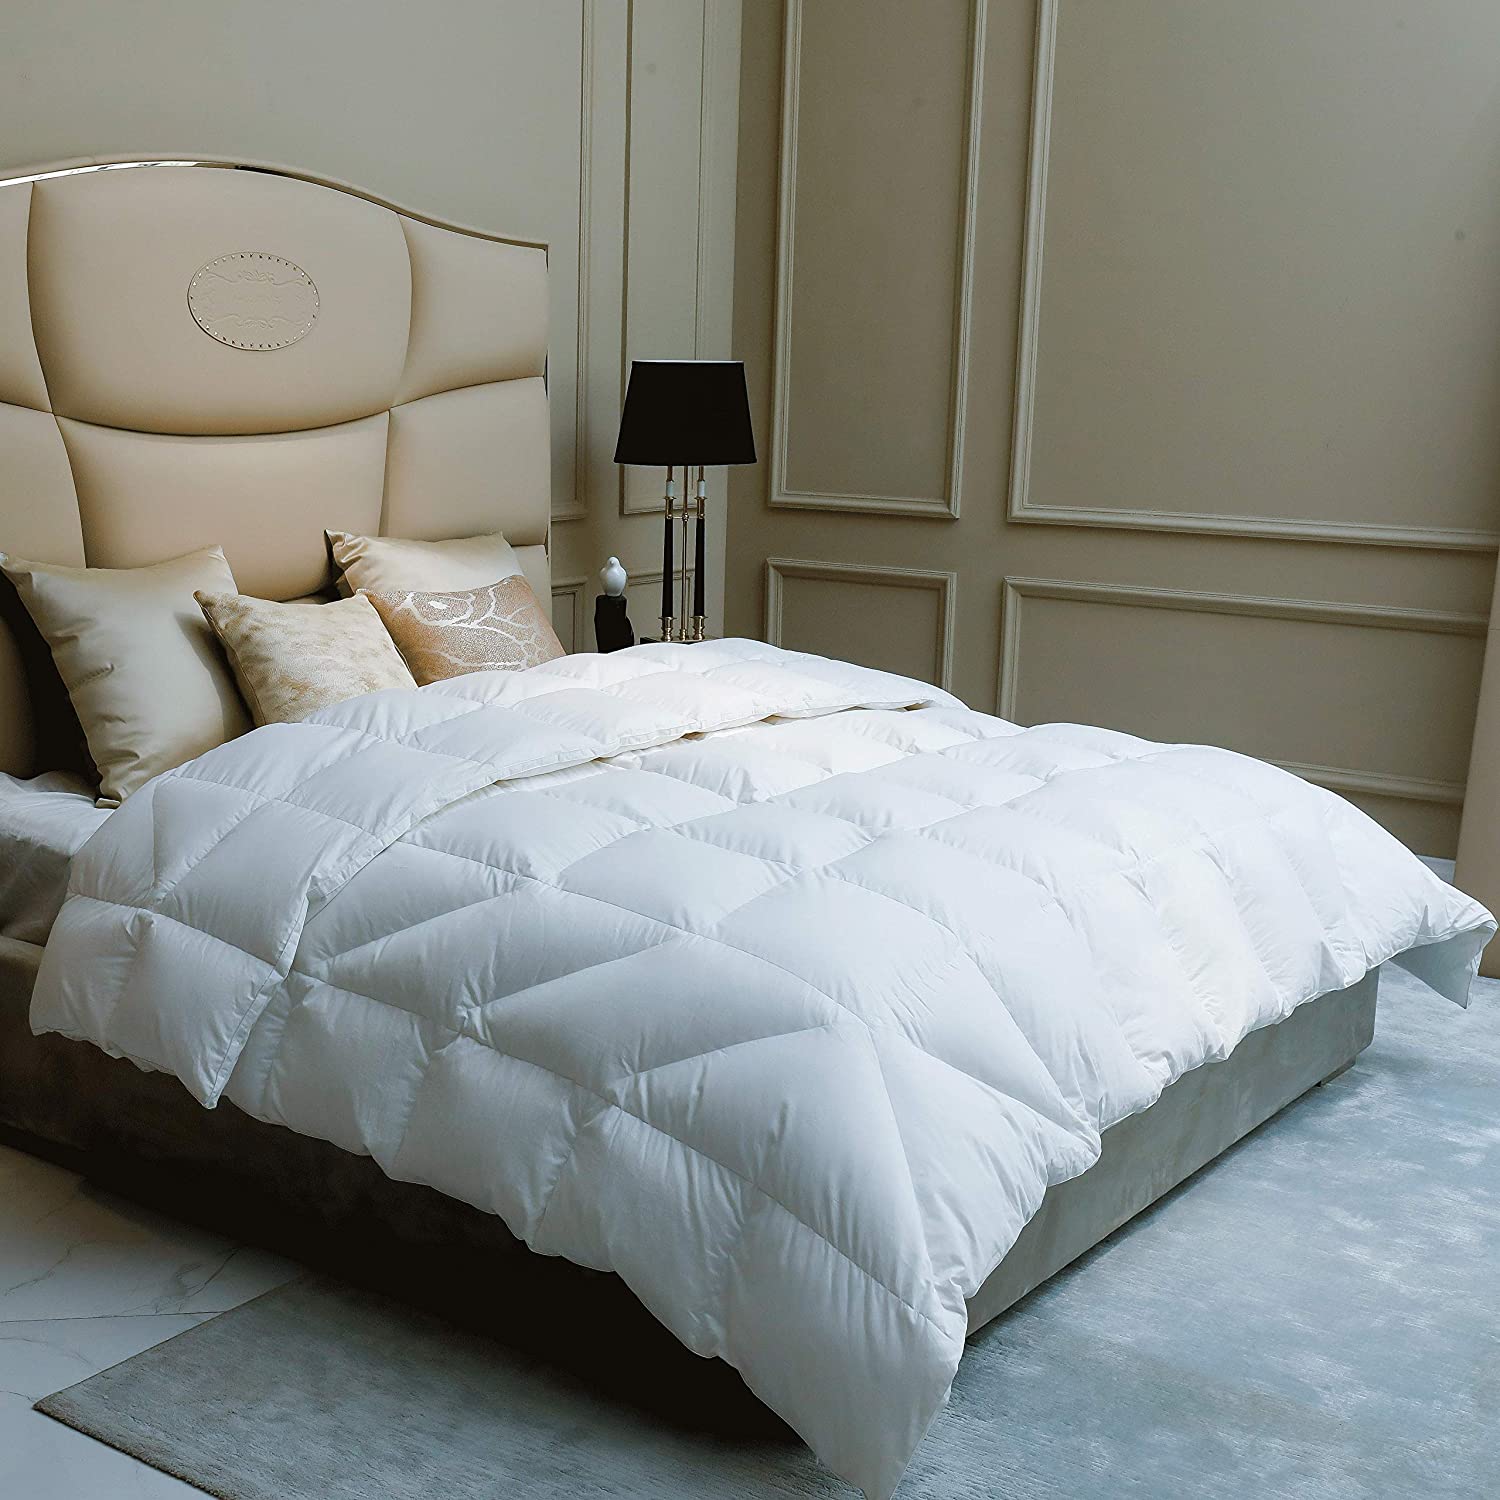 King Size Down Comforter&Duvet Inserts,Natural White Down Cluster Filling,Space Capsule Design,Lightweight,750 FP,100% Cotton Cover,Silent Duvet for All Sleep